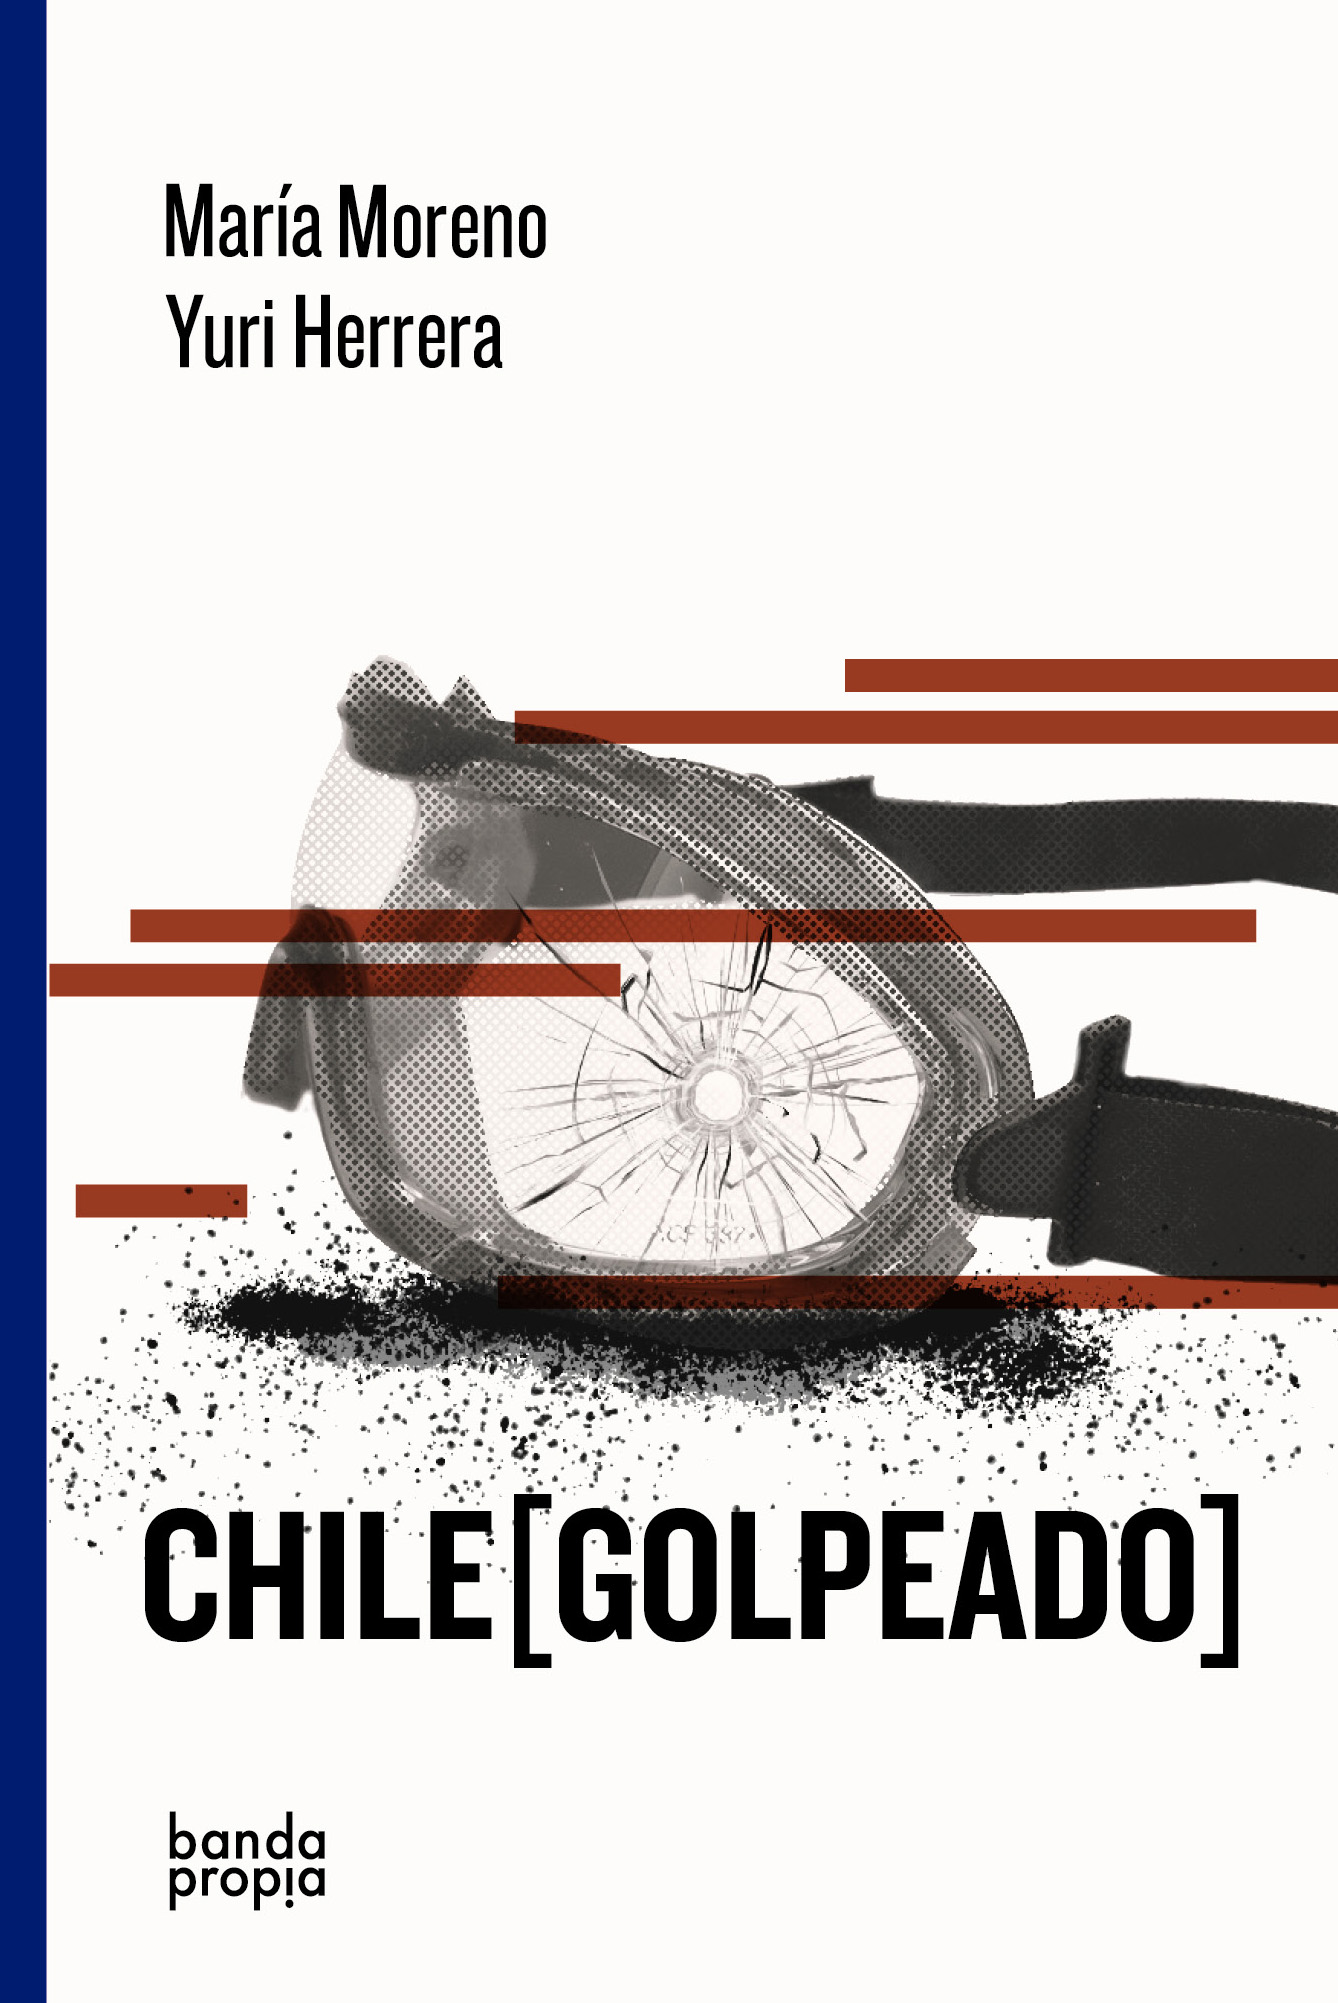 Chile [golpeado] - María Moreno | Yuri Herrera